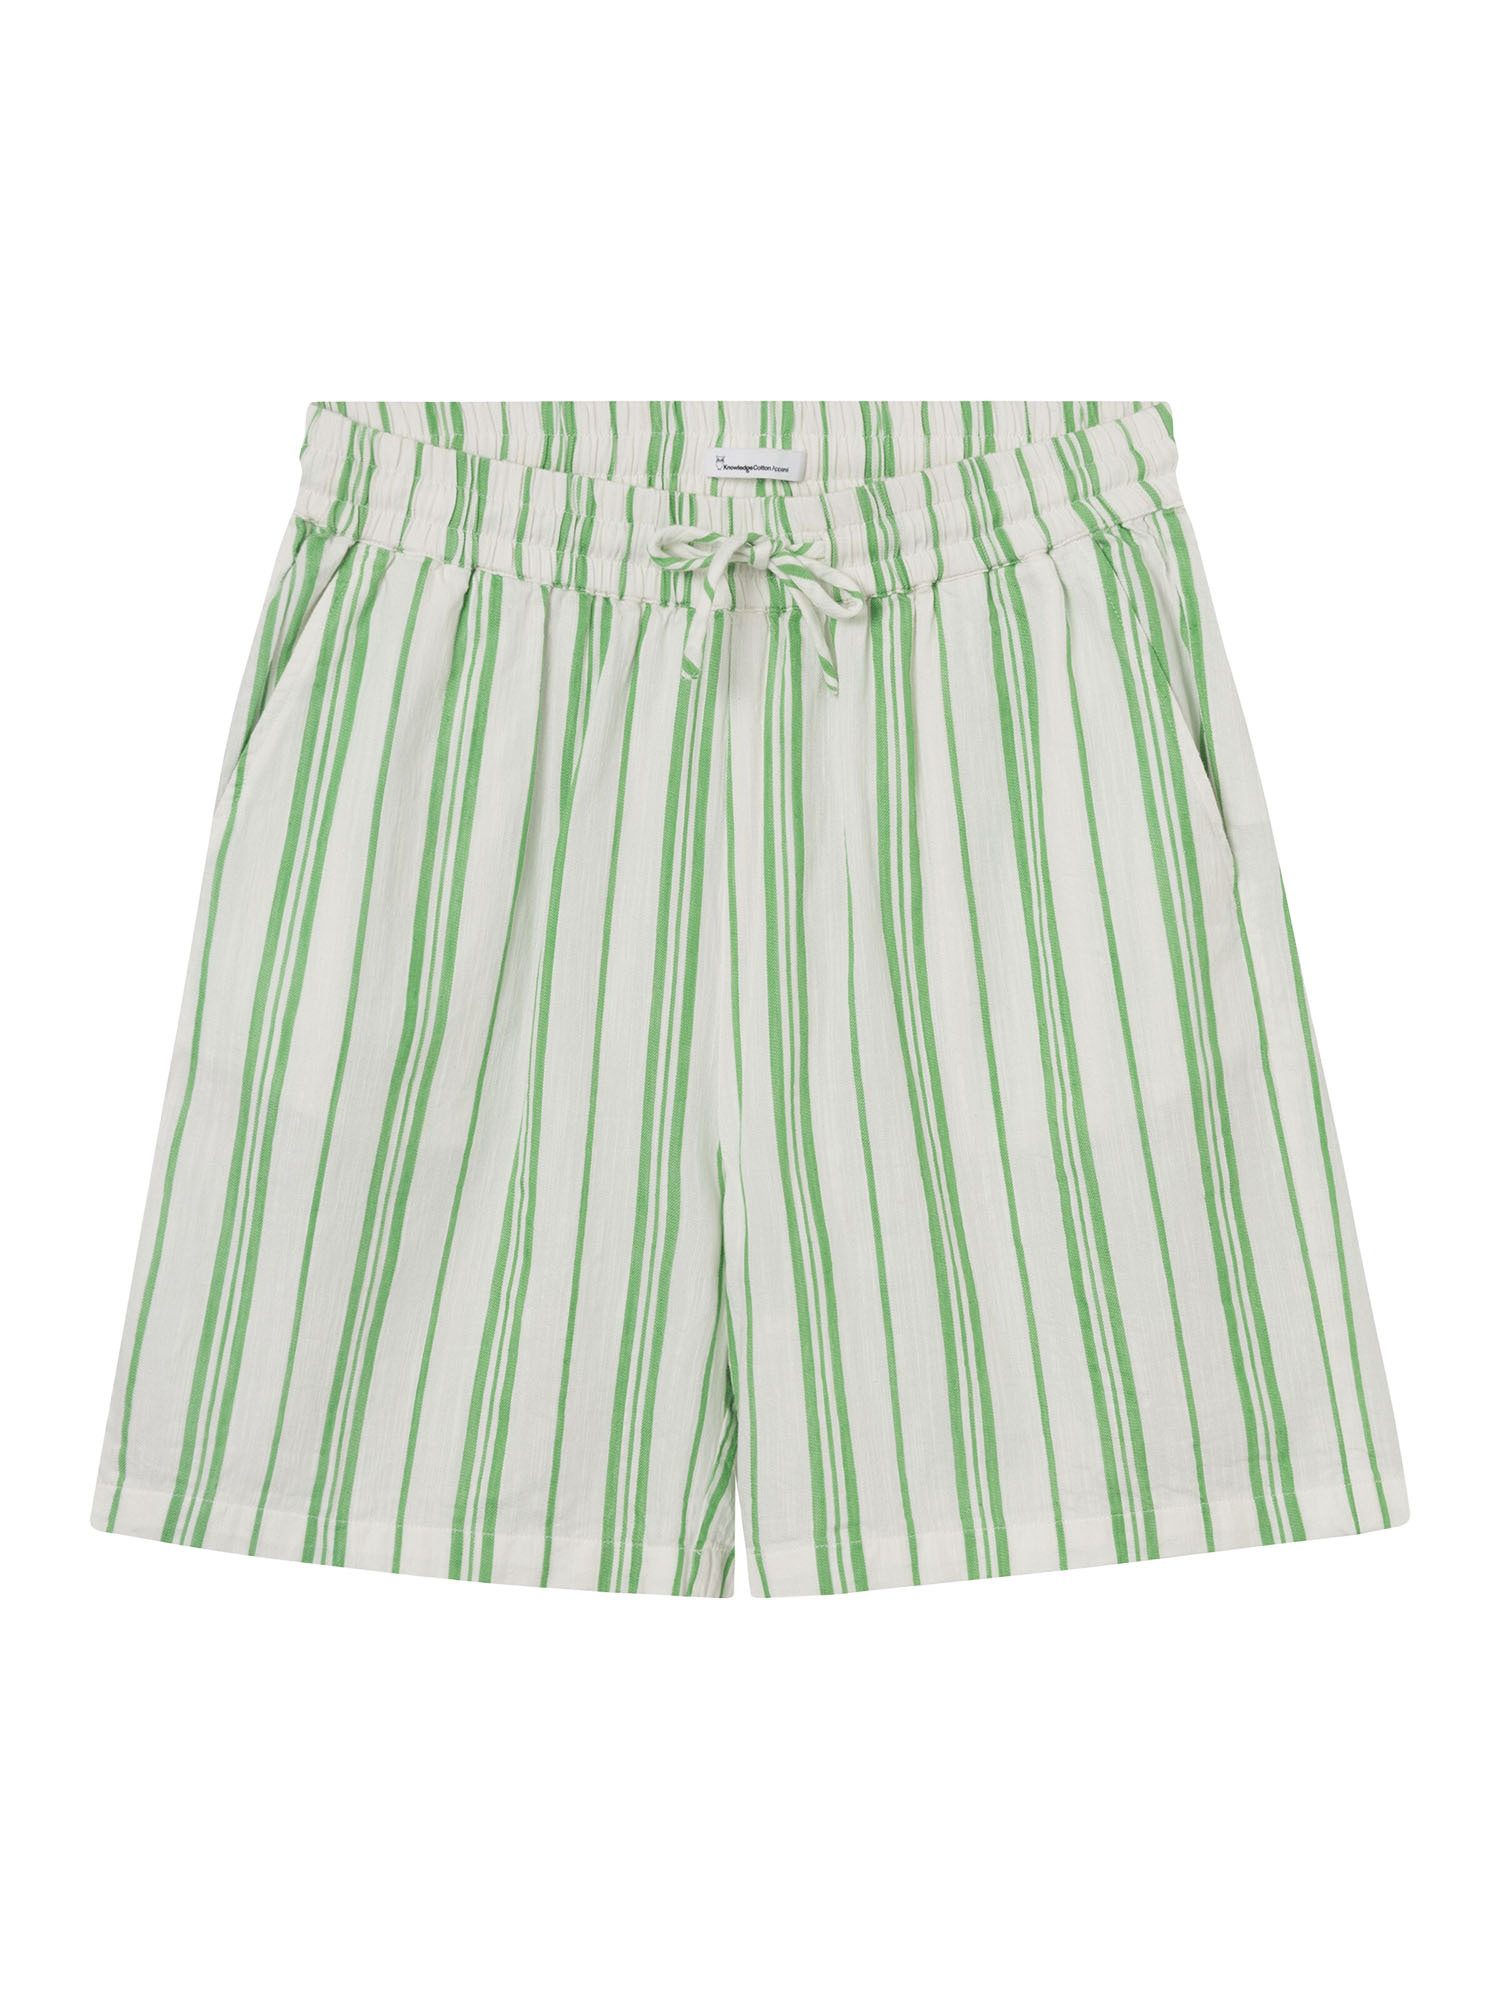 KnowledgeCotton Apparel Shorts Cotton elastic waist shorts